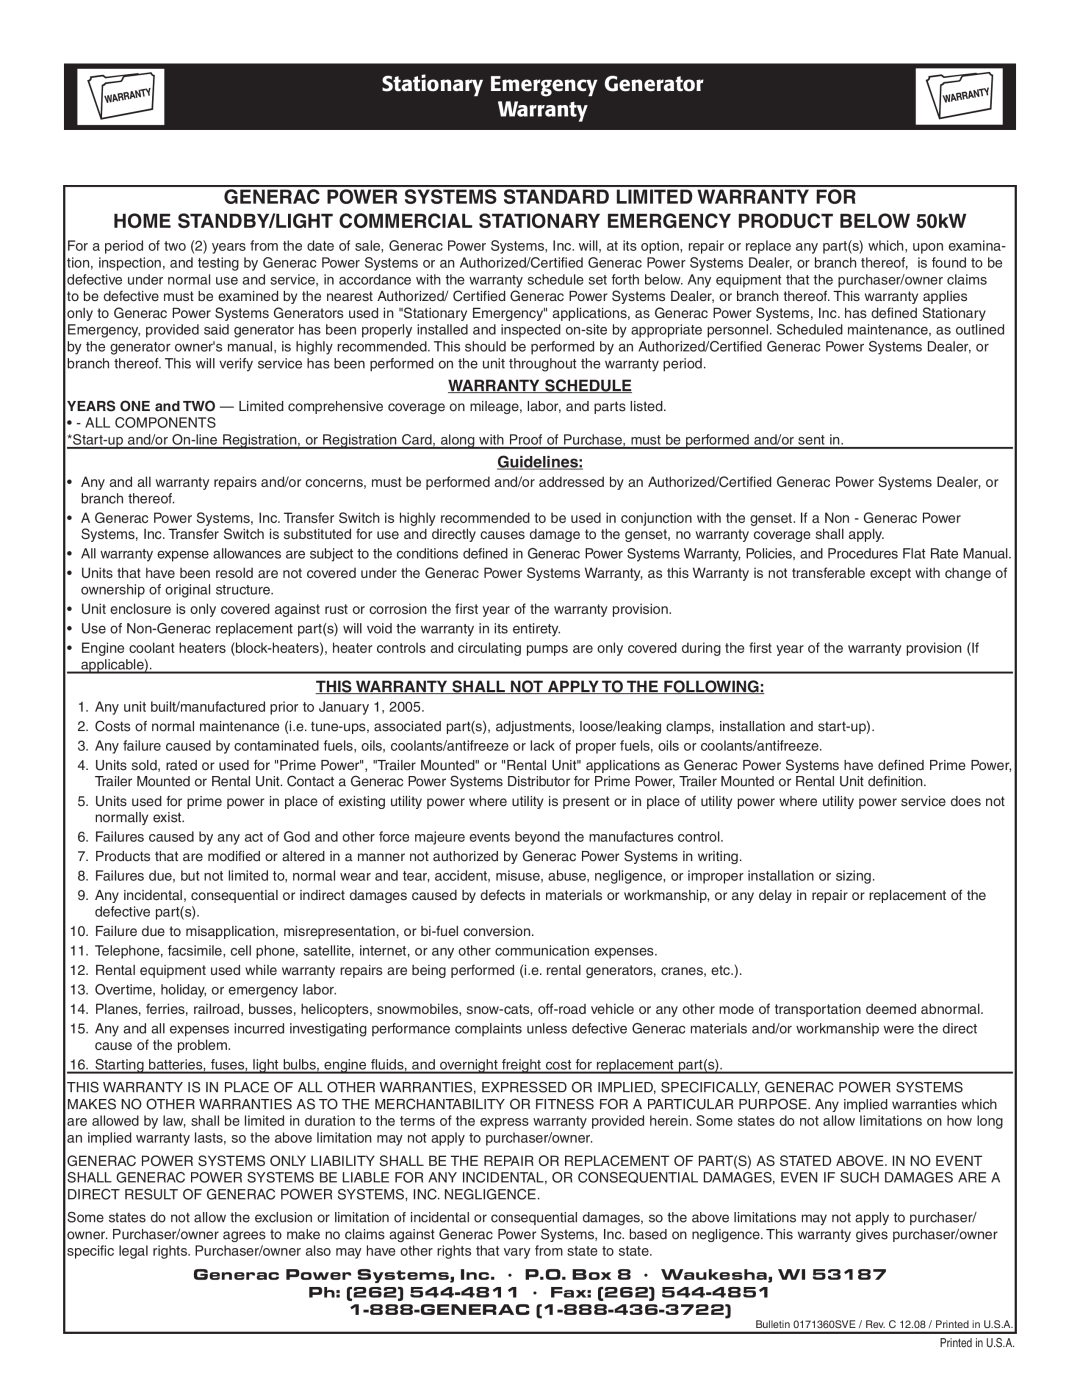 Grandstream Networks 005261-0 owner manual Stationary Emergency Generator Warranty, Warranty Schedule, Guidelines 